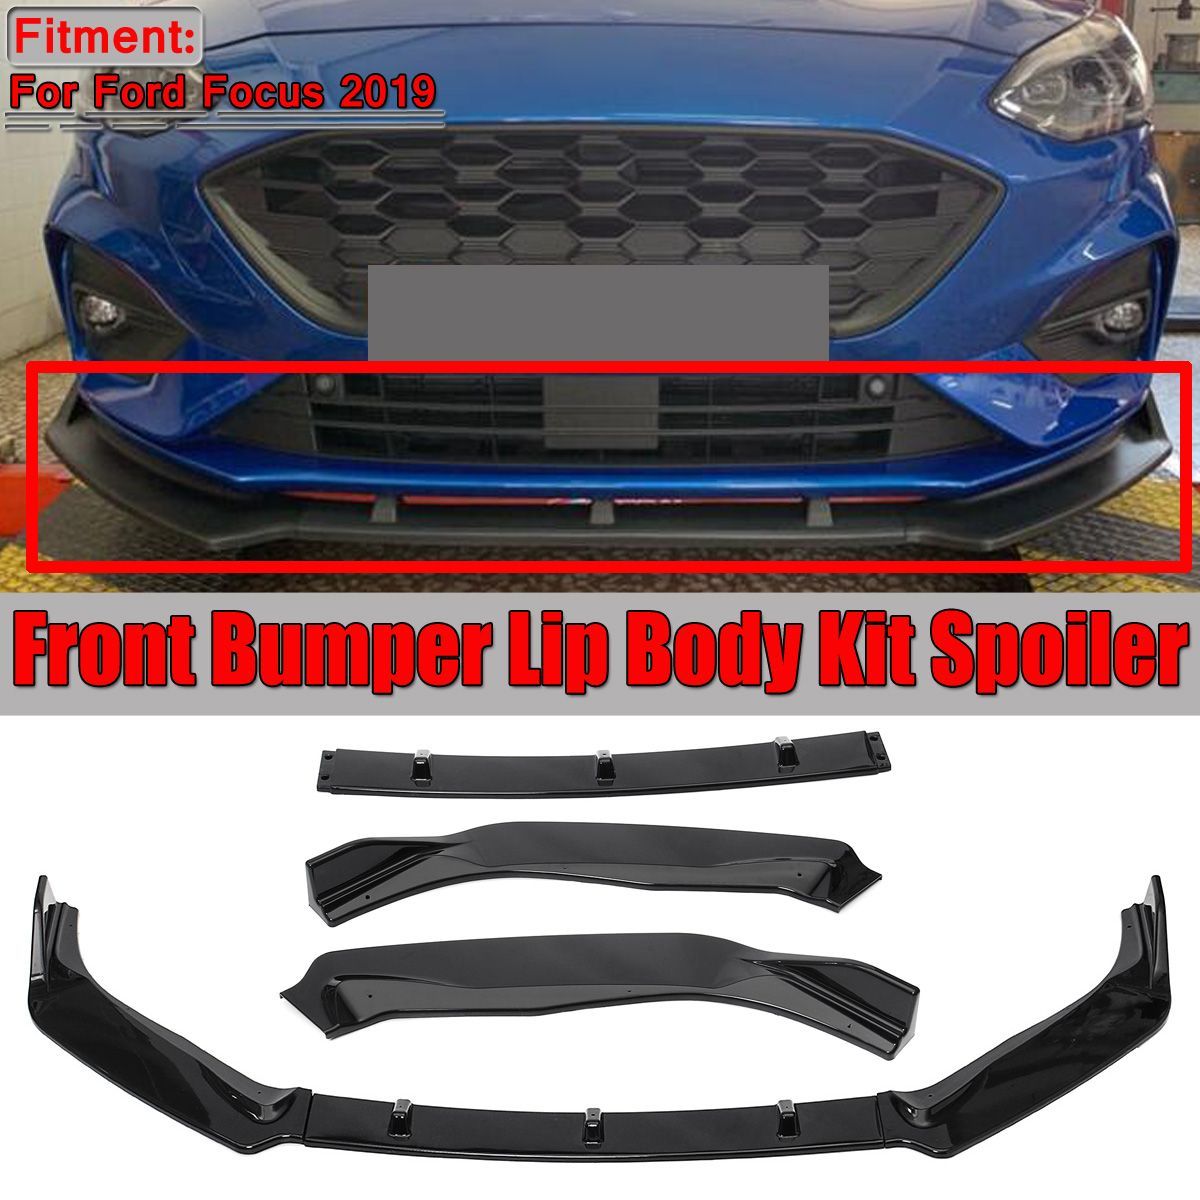 Car-Glossy-Black-Front-Bumper-Lip-Body-Kit-Spoiler-For-Ford-Focus-2019-1685751